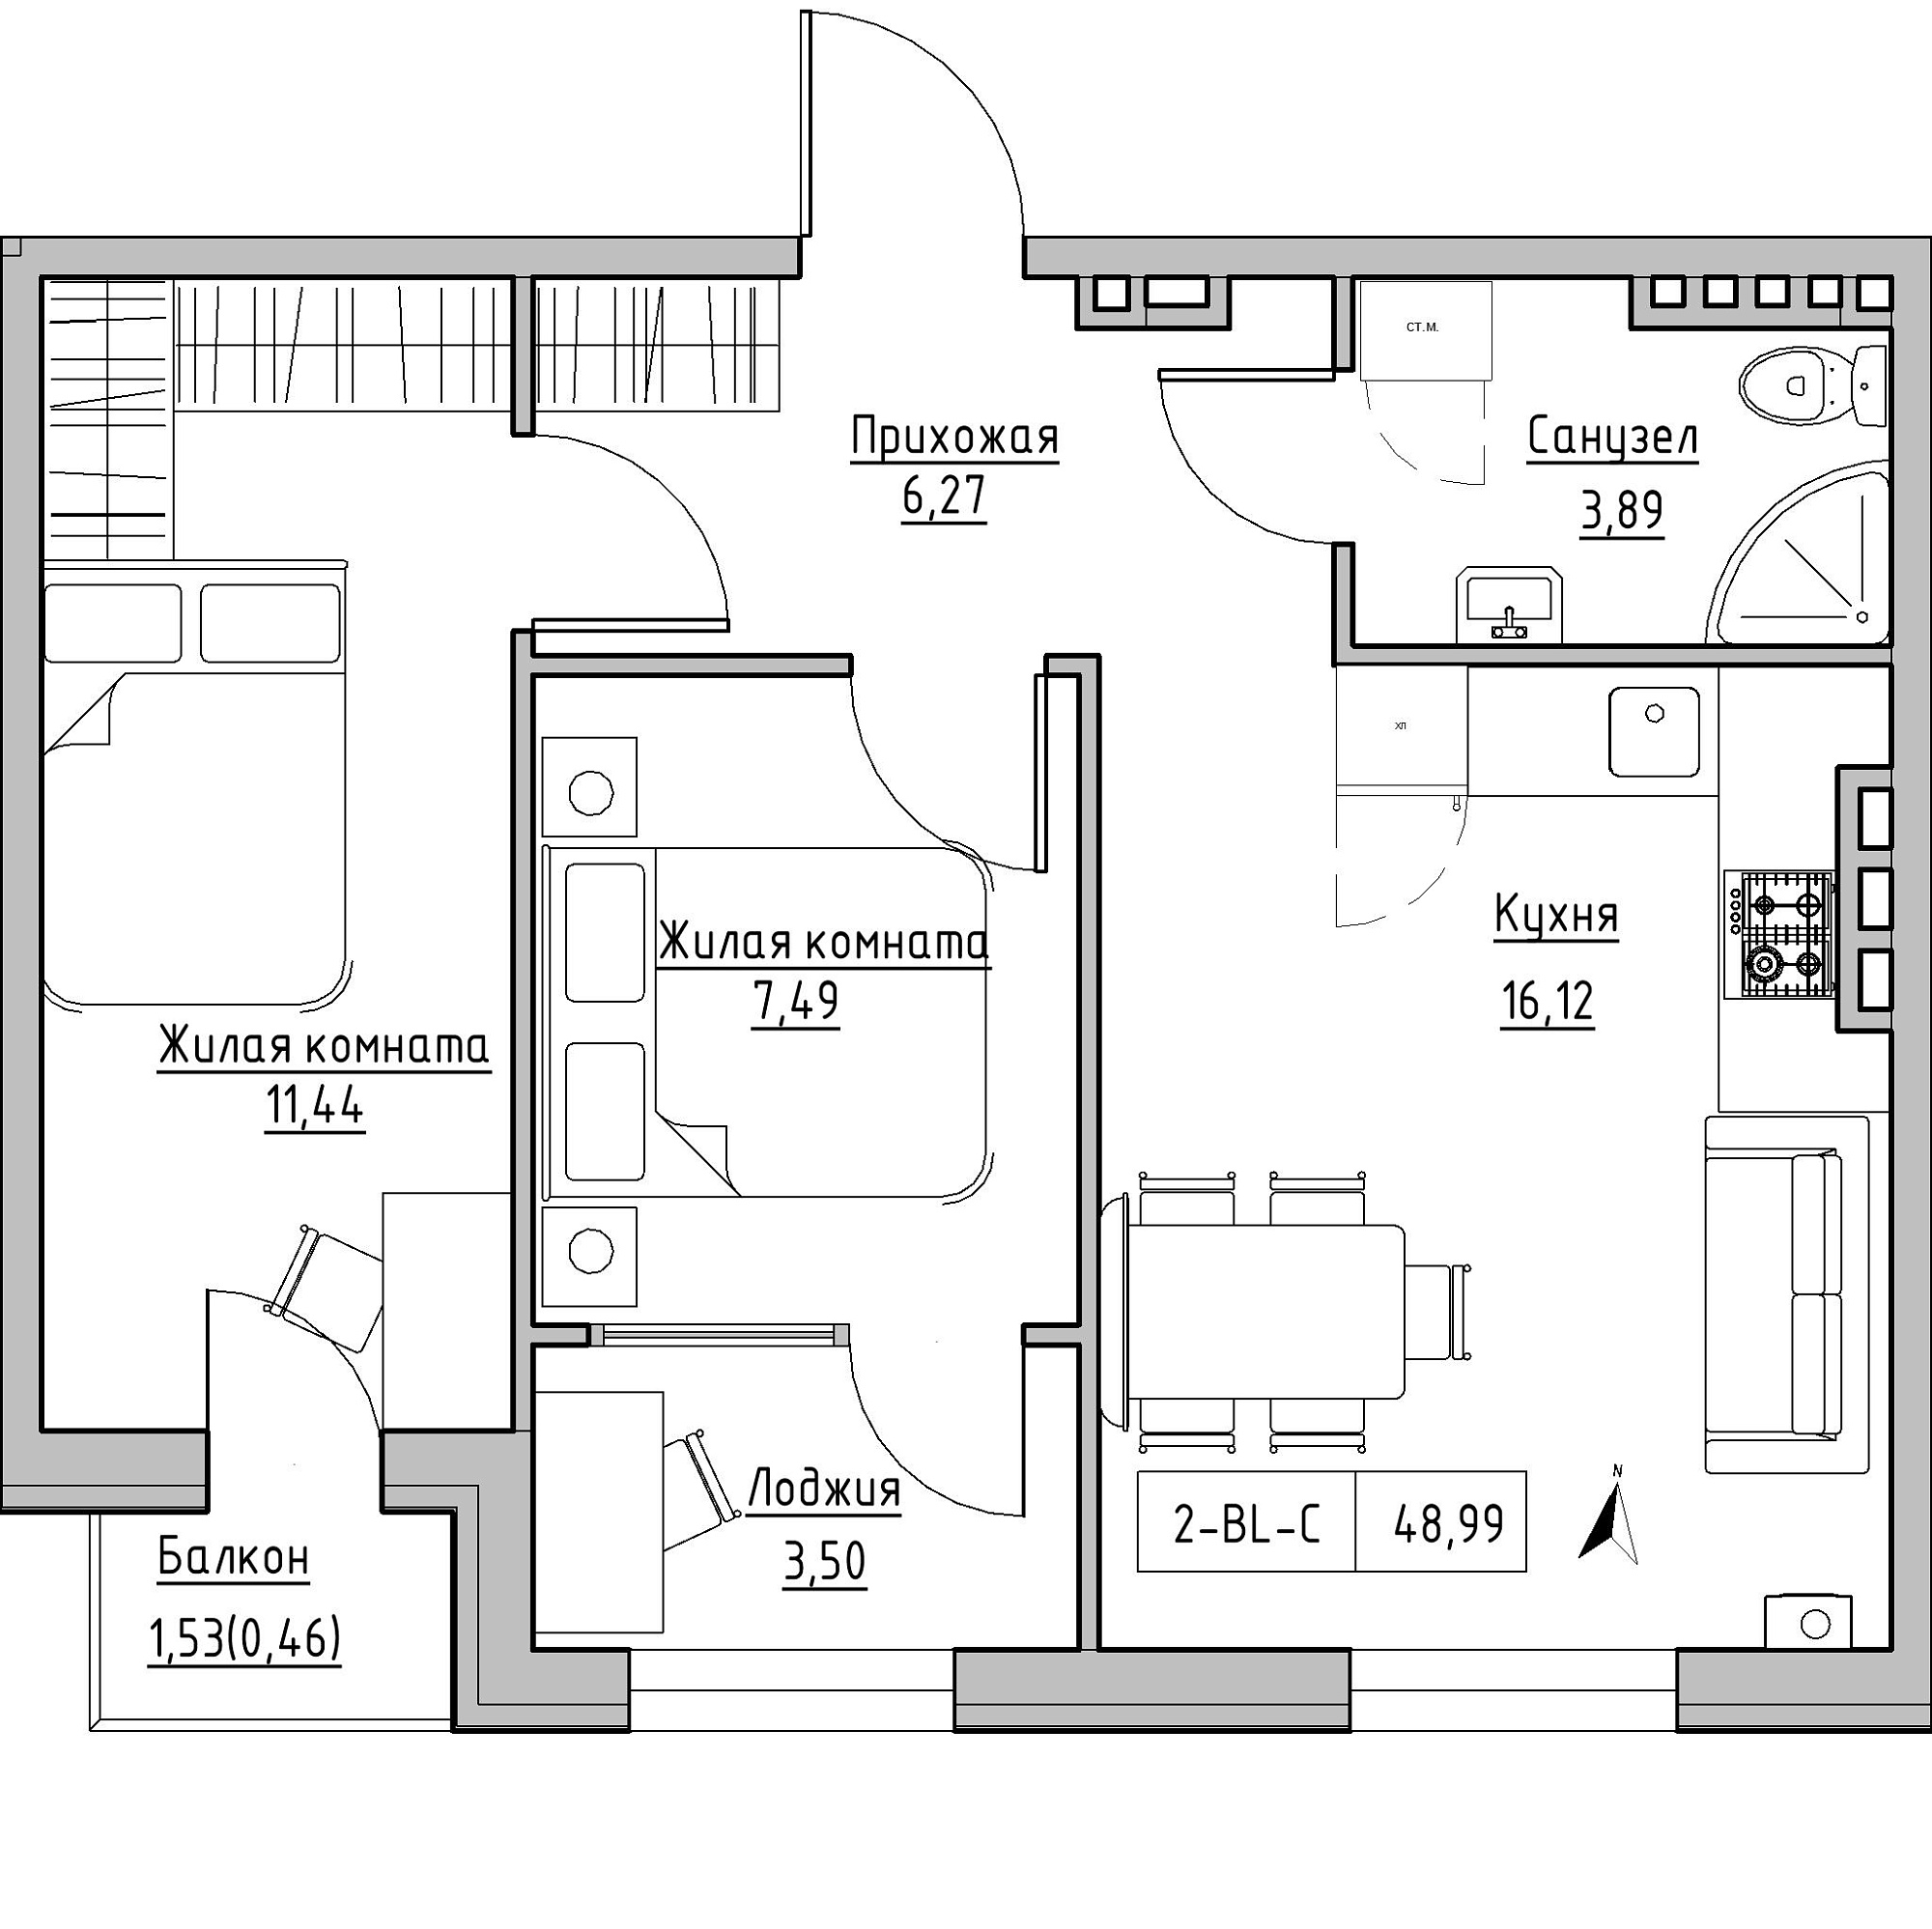 Planning 2-rm flats area 48.99m2, KS-024-04/0009.